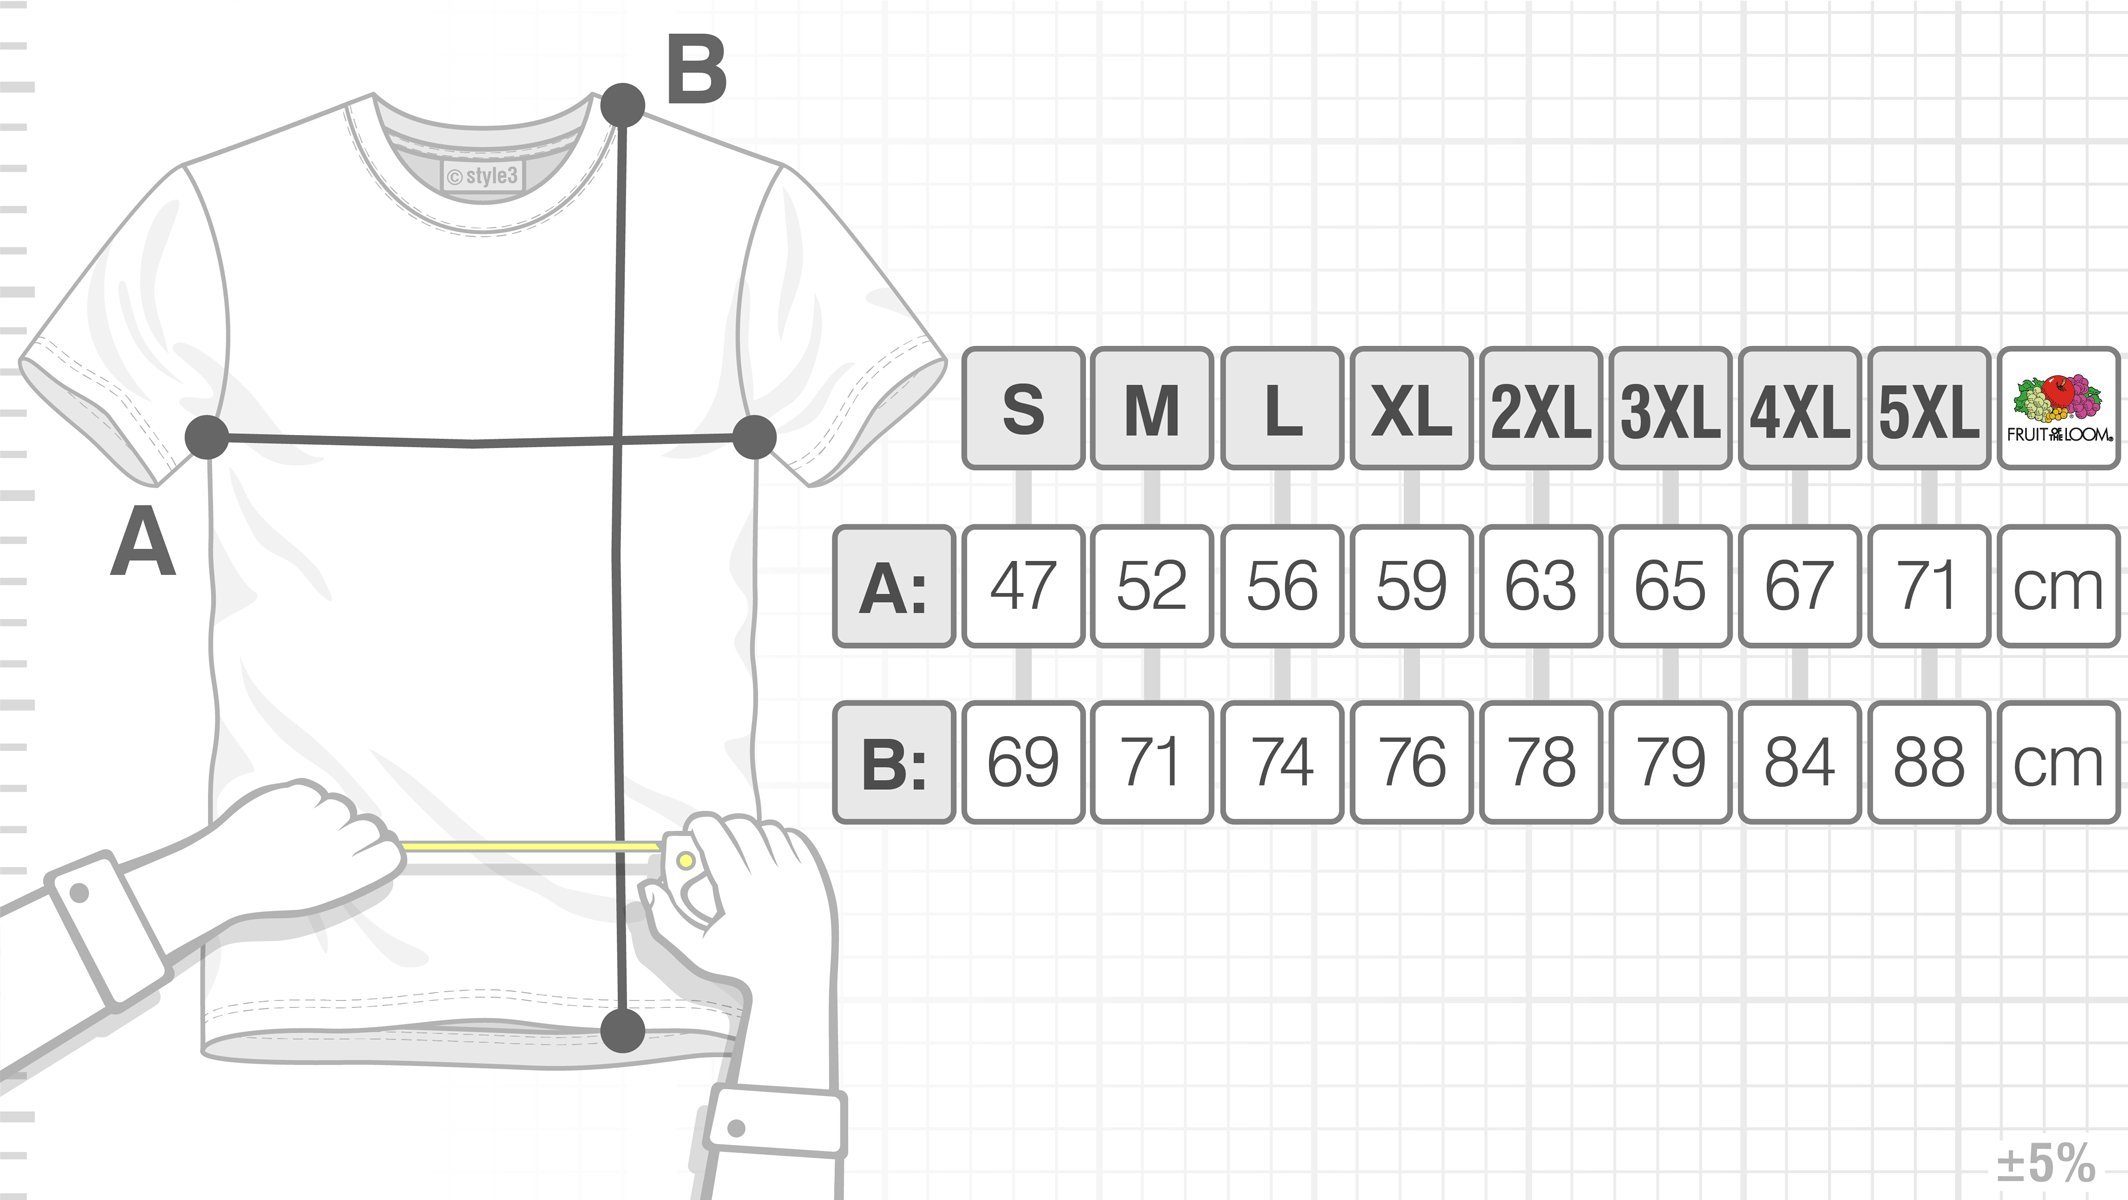 style3 Print-Shirt Level T-Shirt switch Mega lite nes smash Herren bros Pixel 8bit